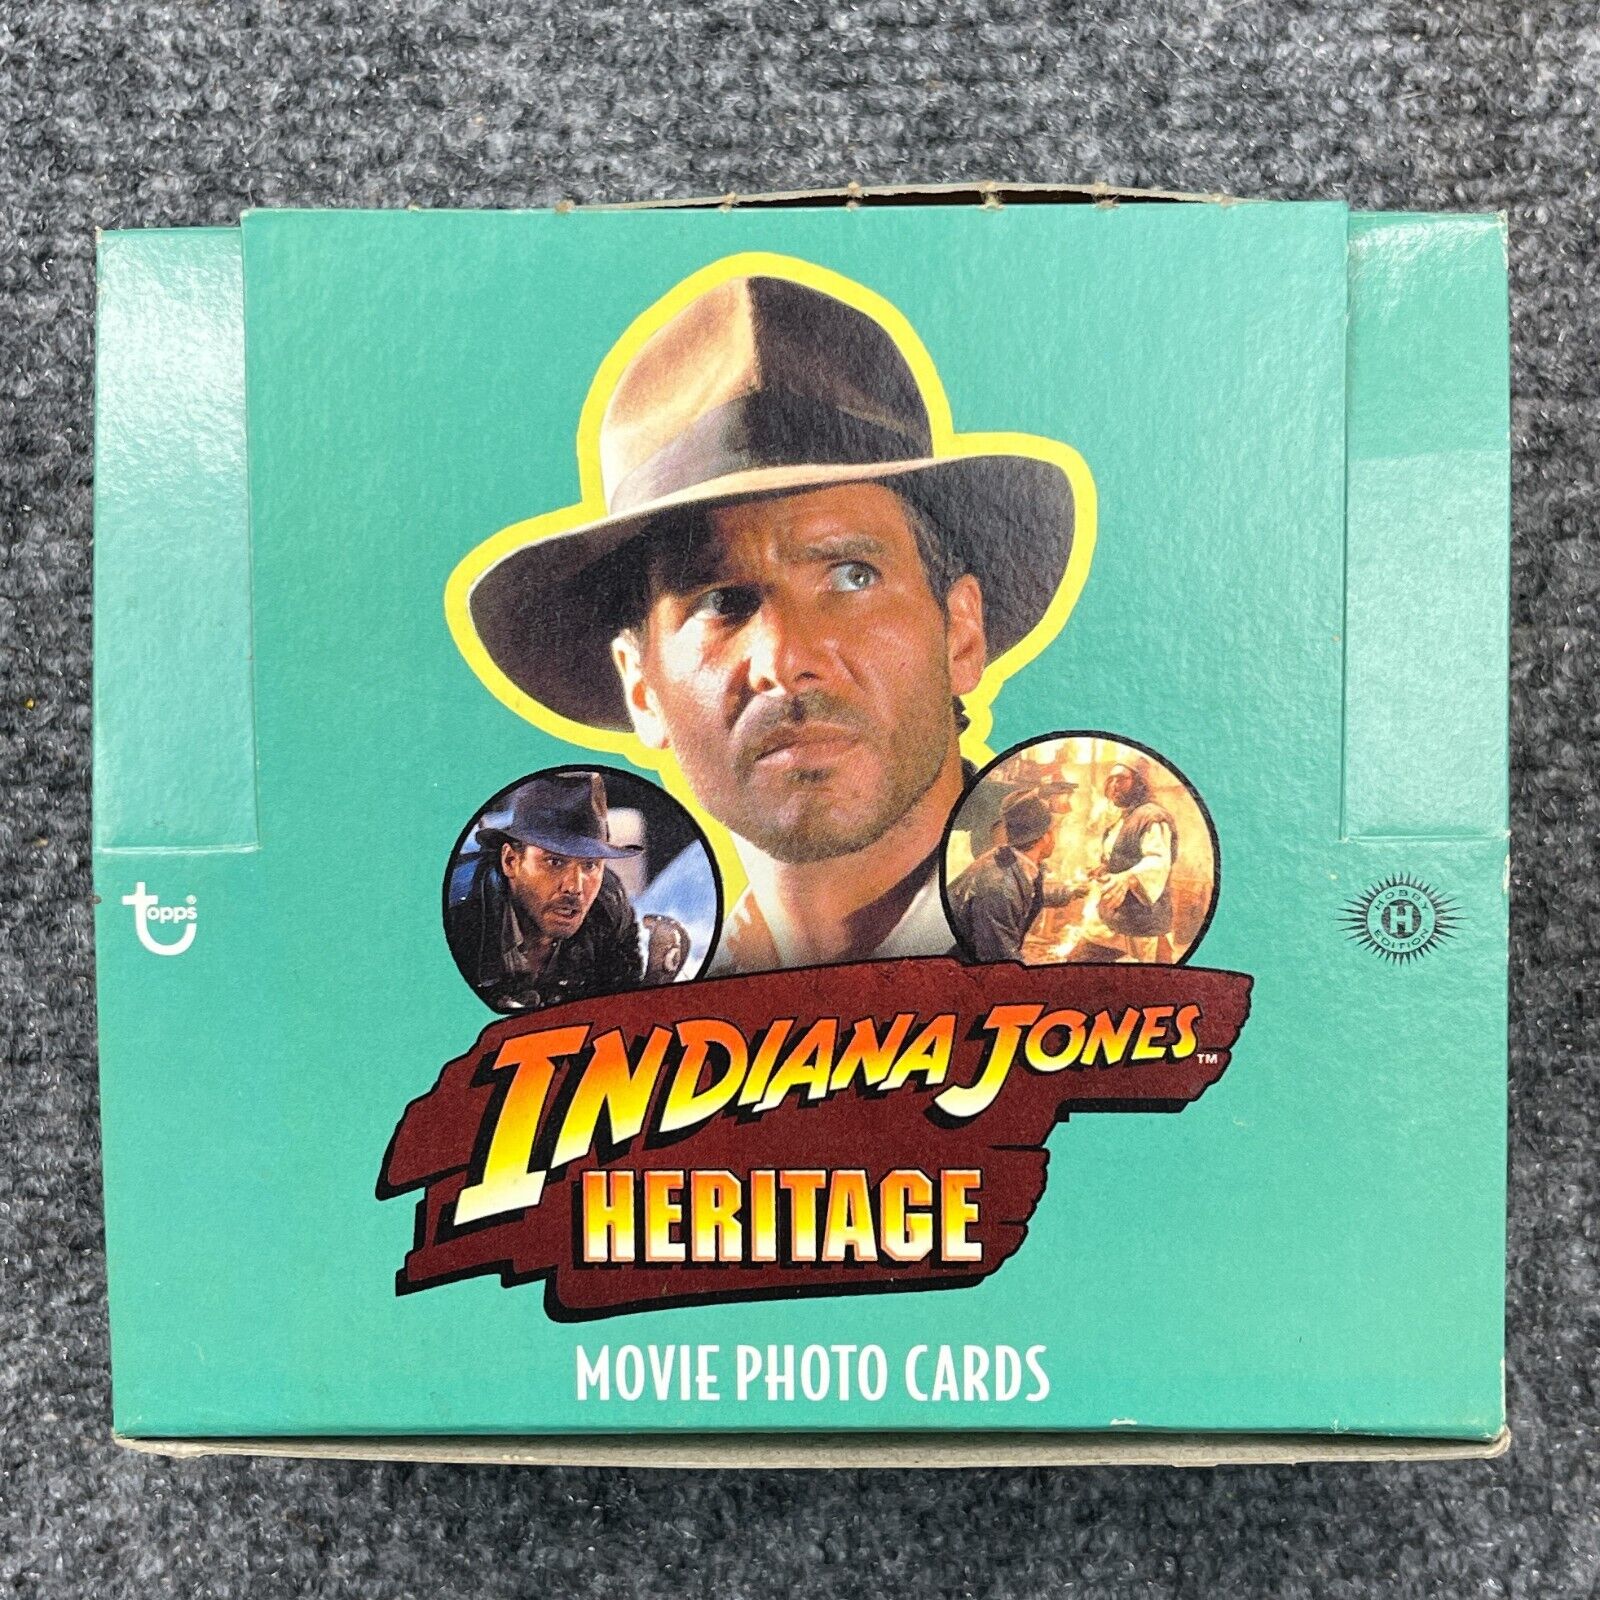 Topps Indiana Jones Heritage Hobby Box 2008 Movie Photo Cards Loose